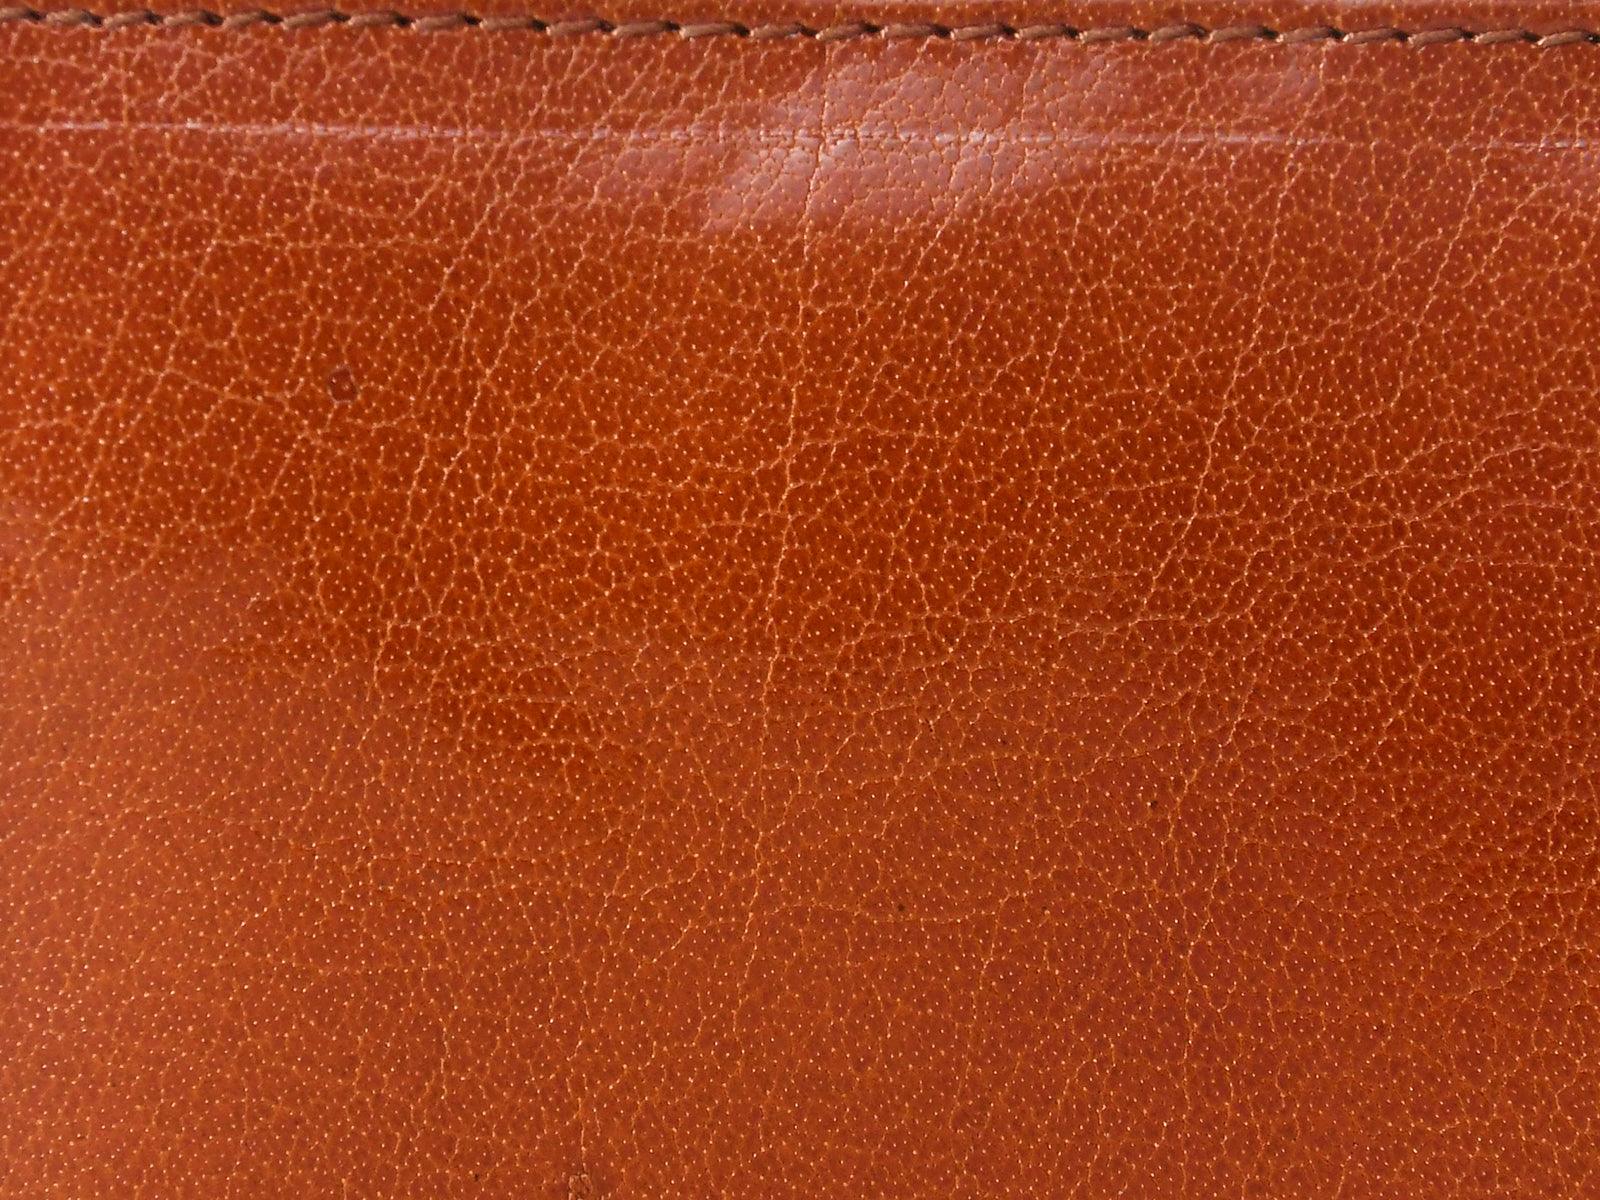 Celtic Brown Color Pure Leather Wallet For Men - CELTICINDIA